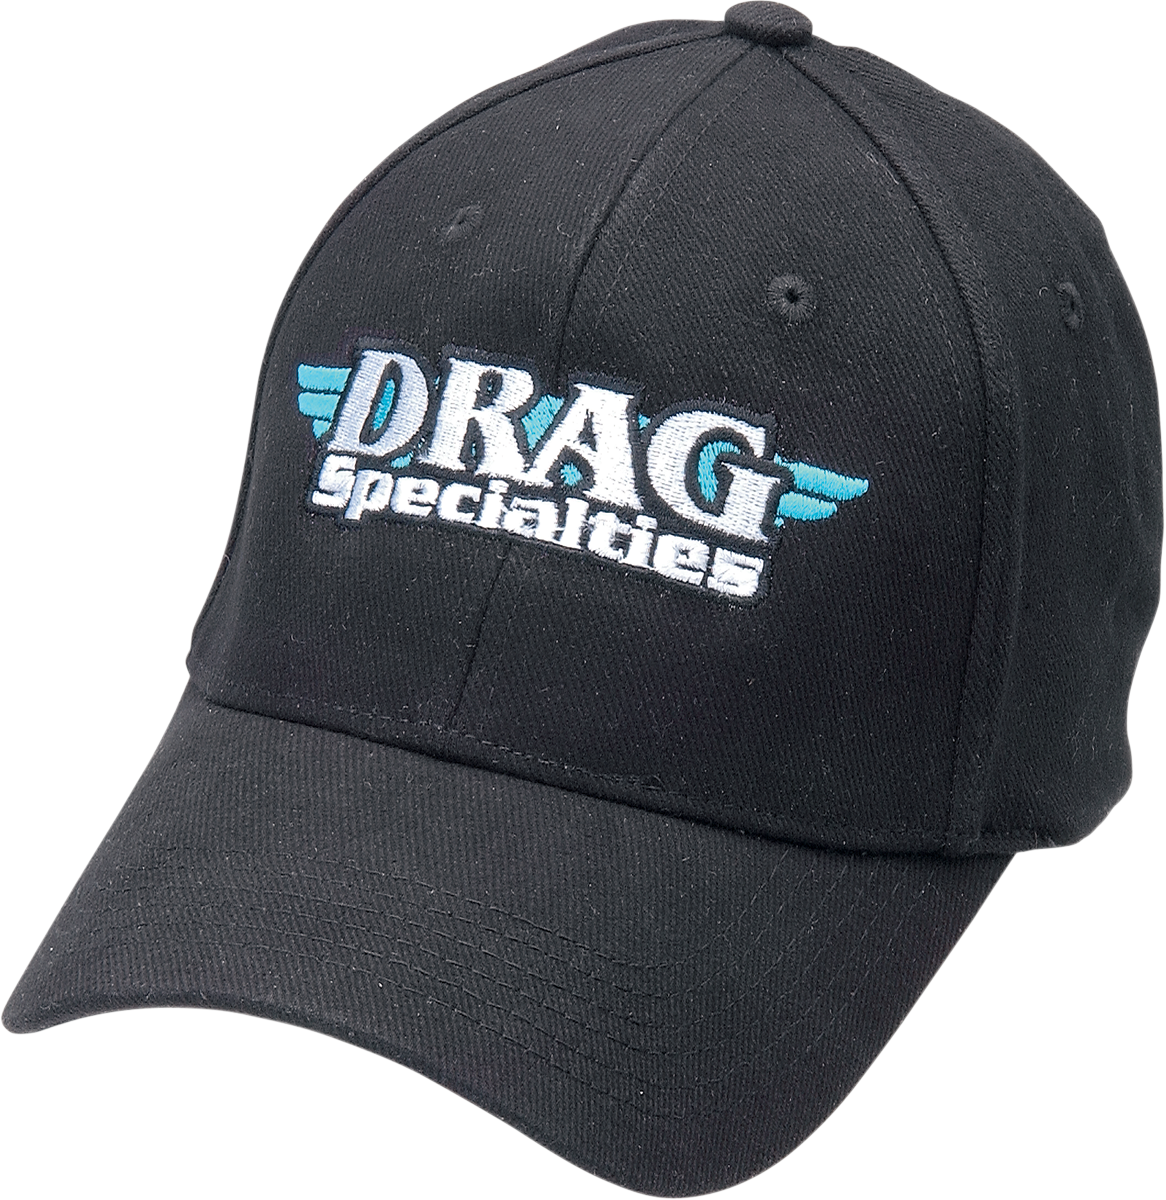 Drag Specialties Unisex Adult Black Blue White Adjustable Cotton Casual Hat